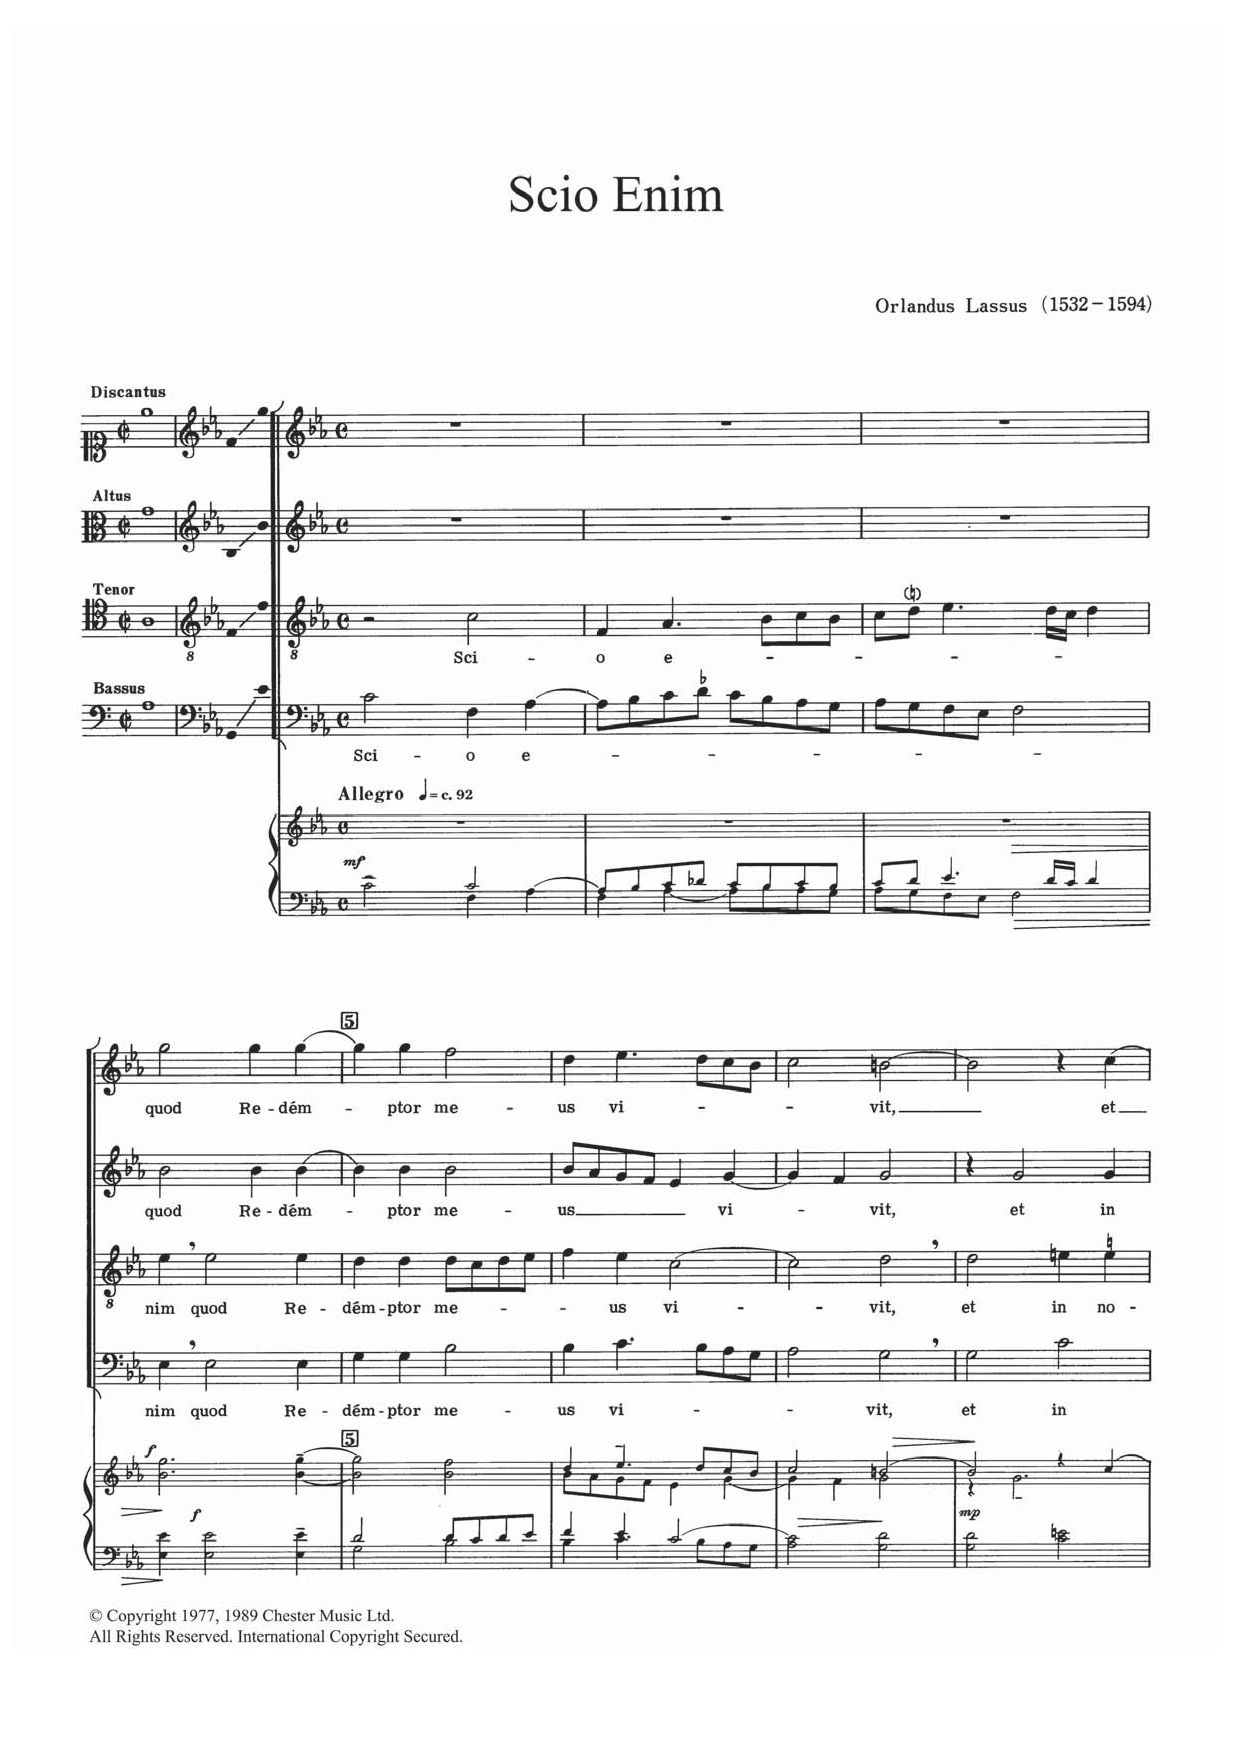 Orlandus Lassus Scio Enim sheet music notes and chords arranged for SATB Choir